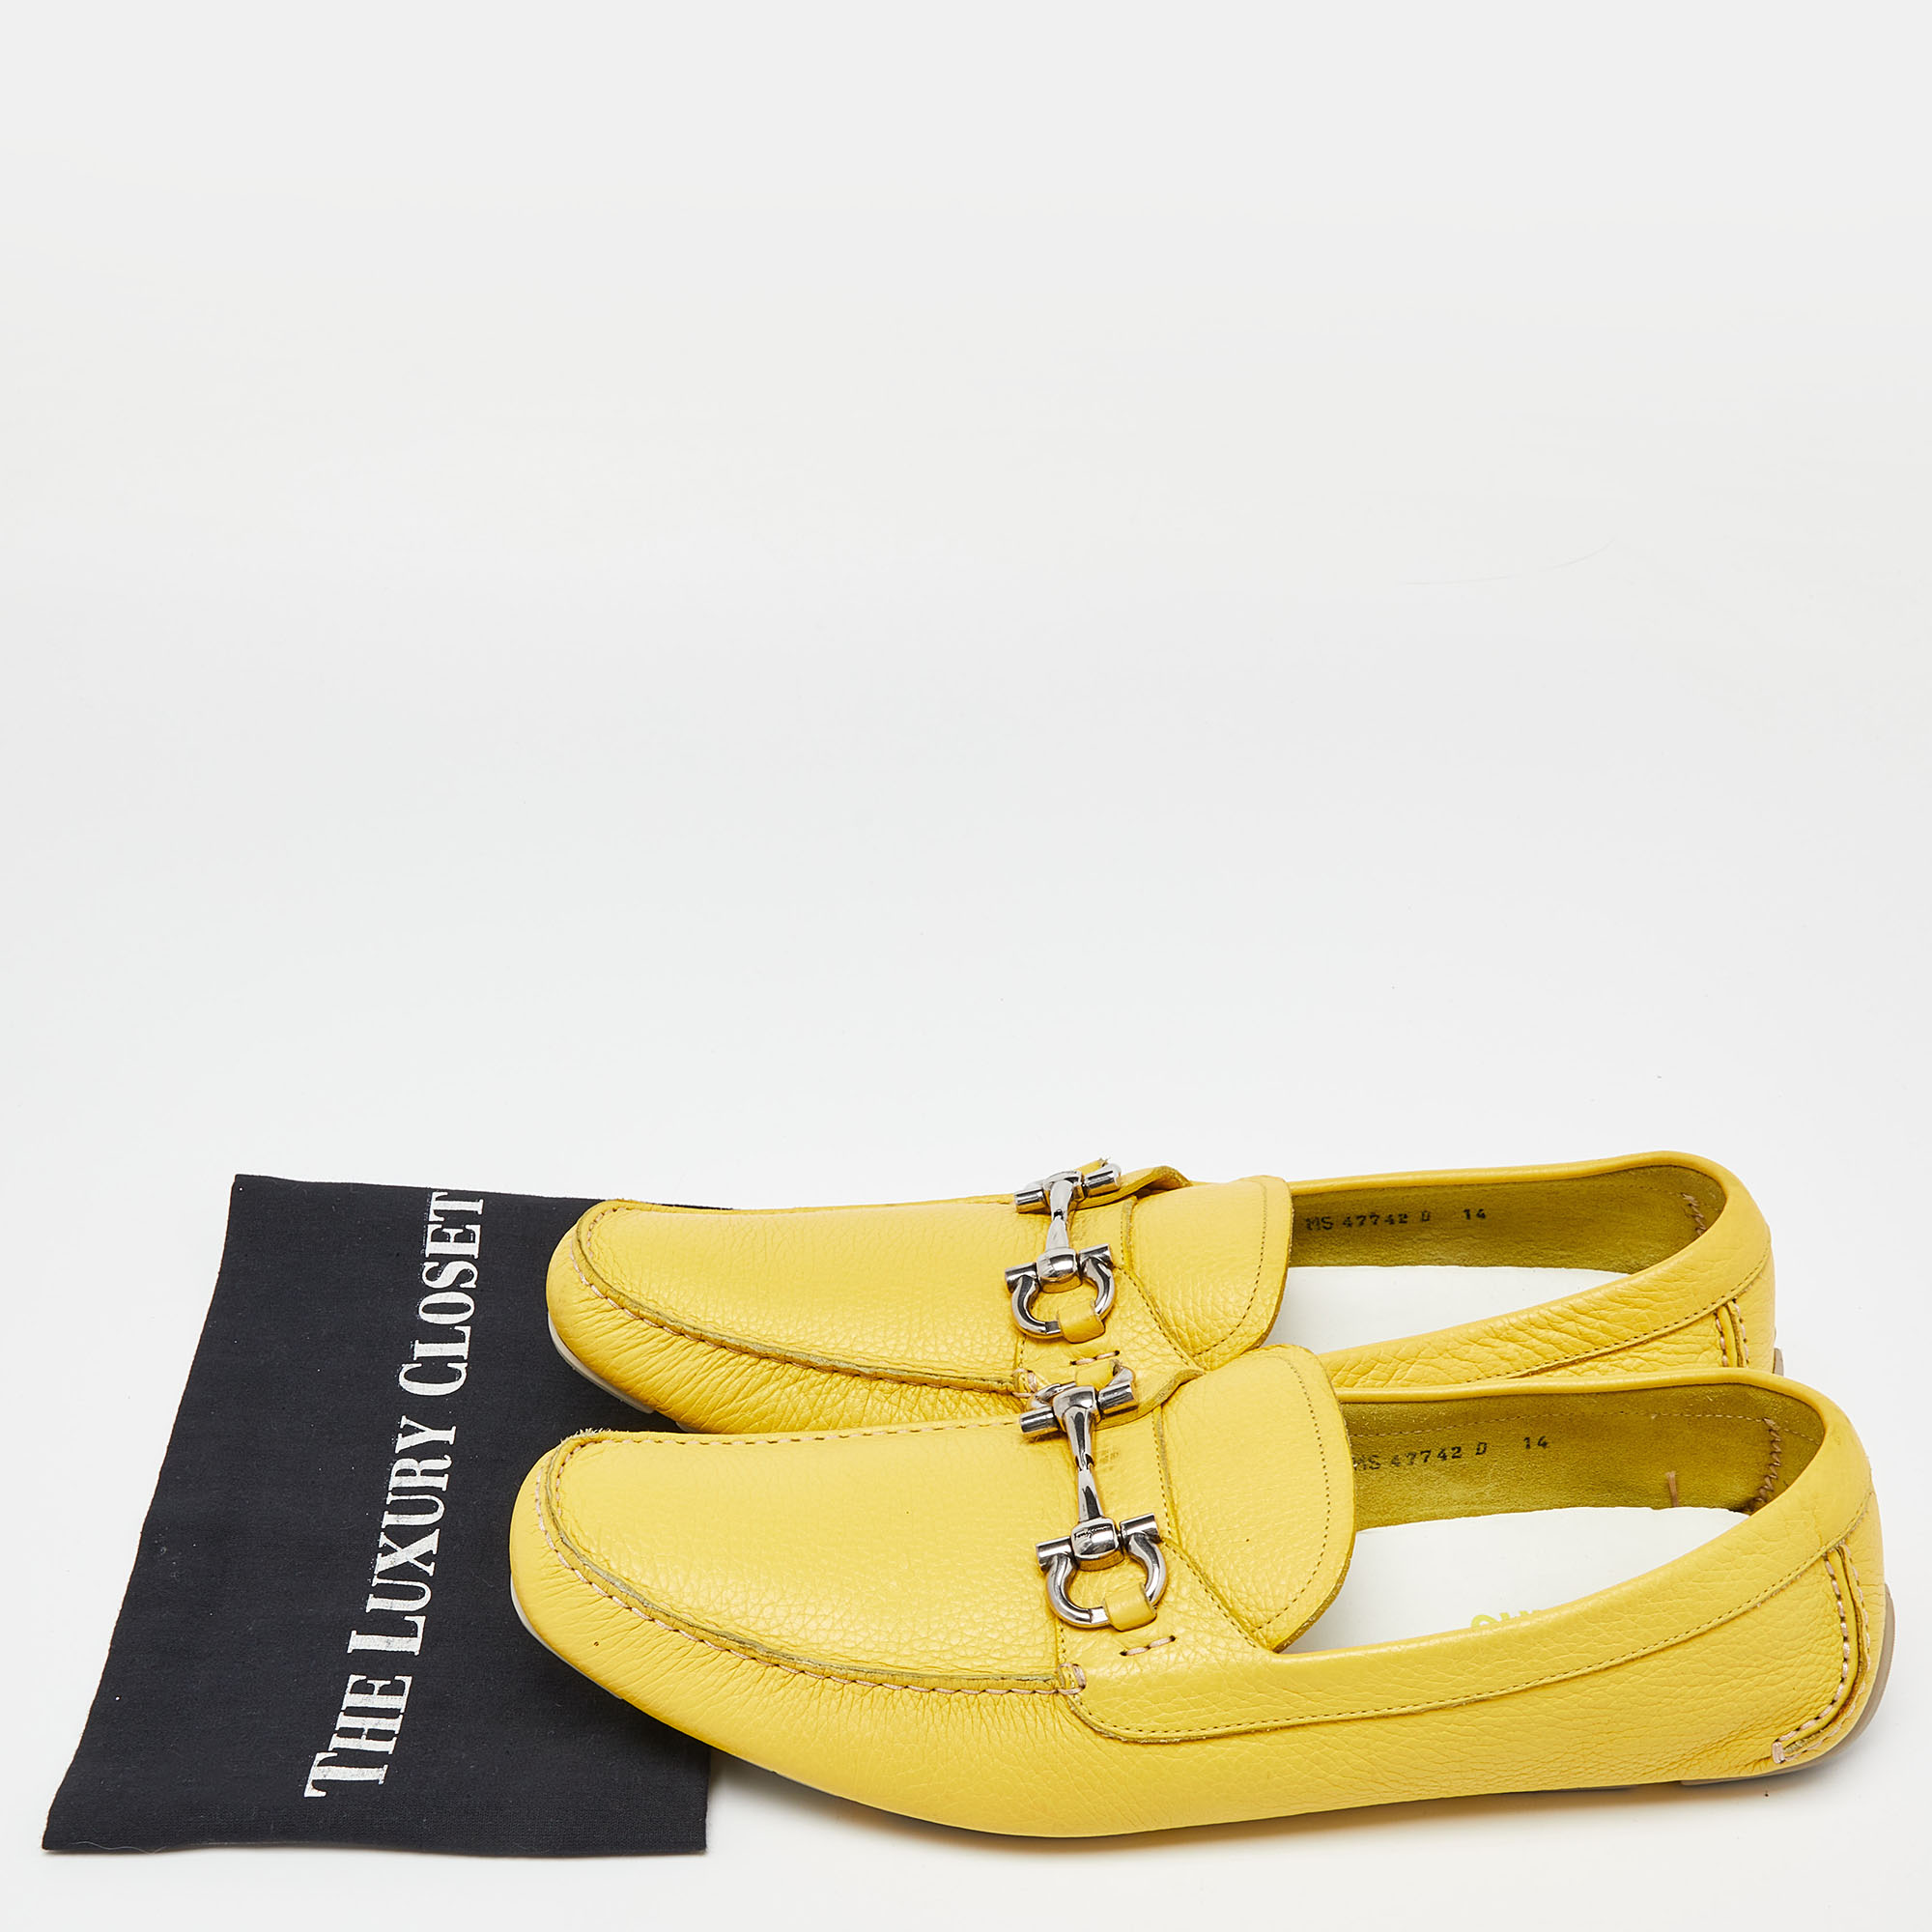 Salvatore Ferragamo Yellow Leather Parigi Slip On Loafers Size 48